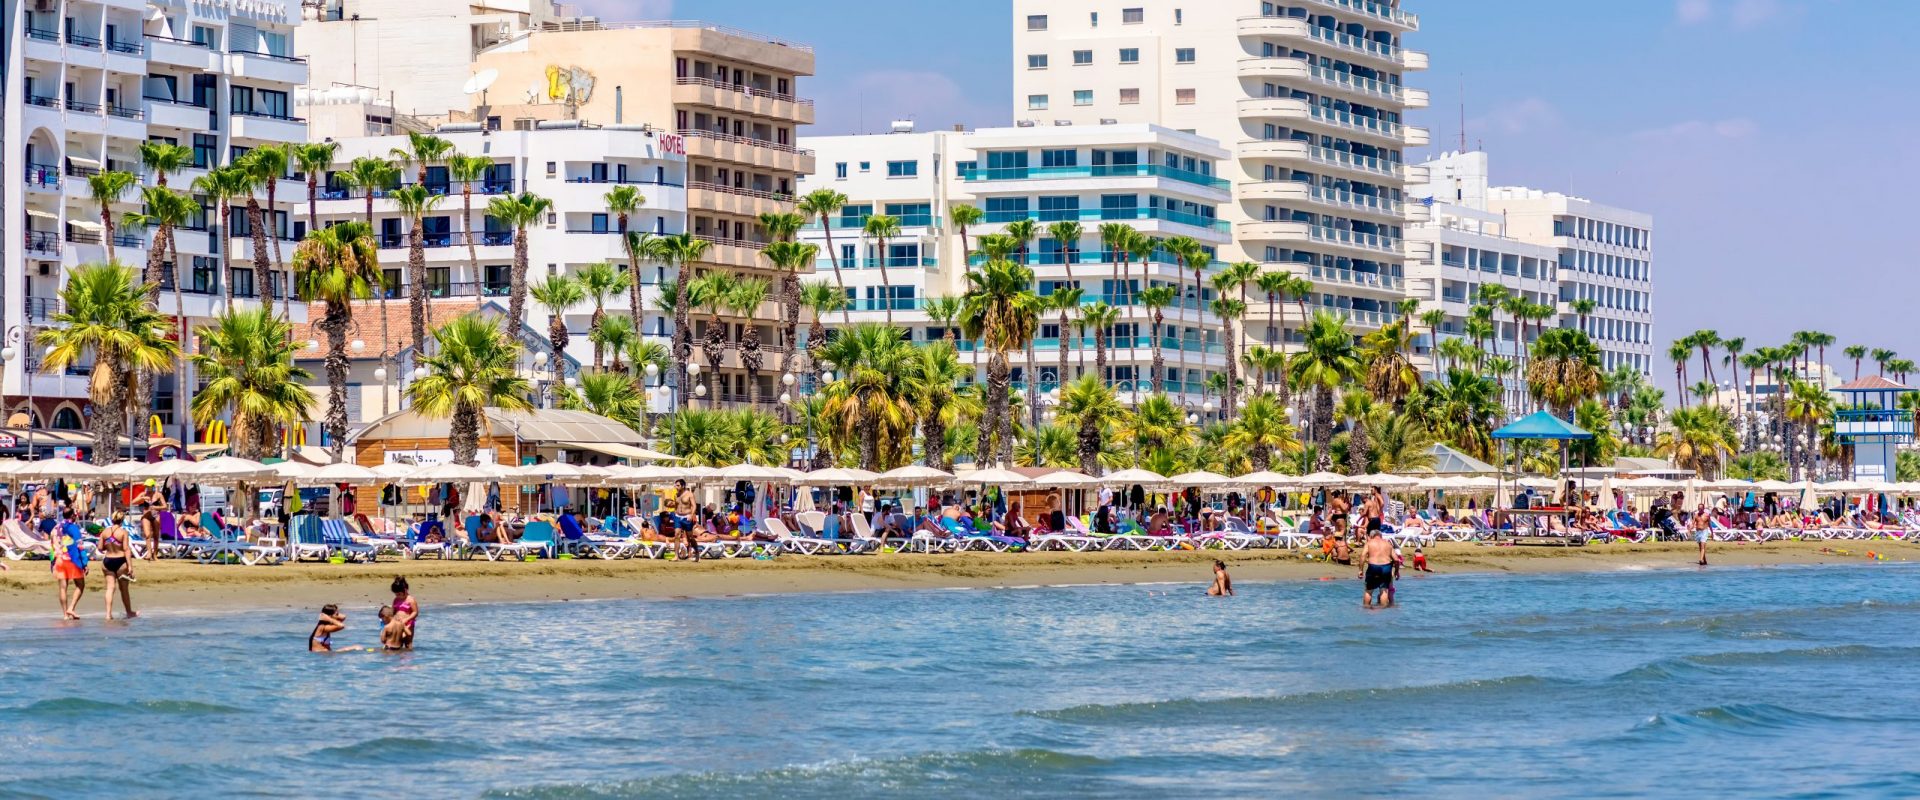 Best Hotels Cyprus DMC